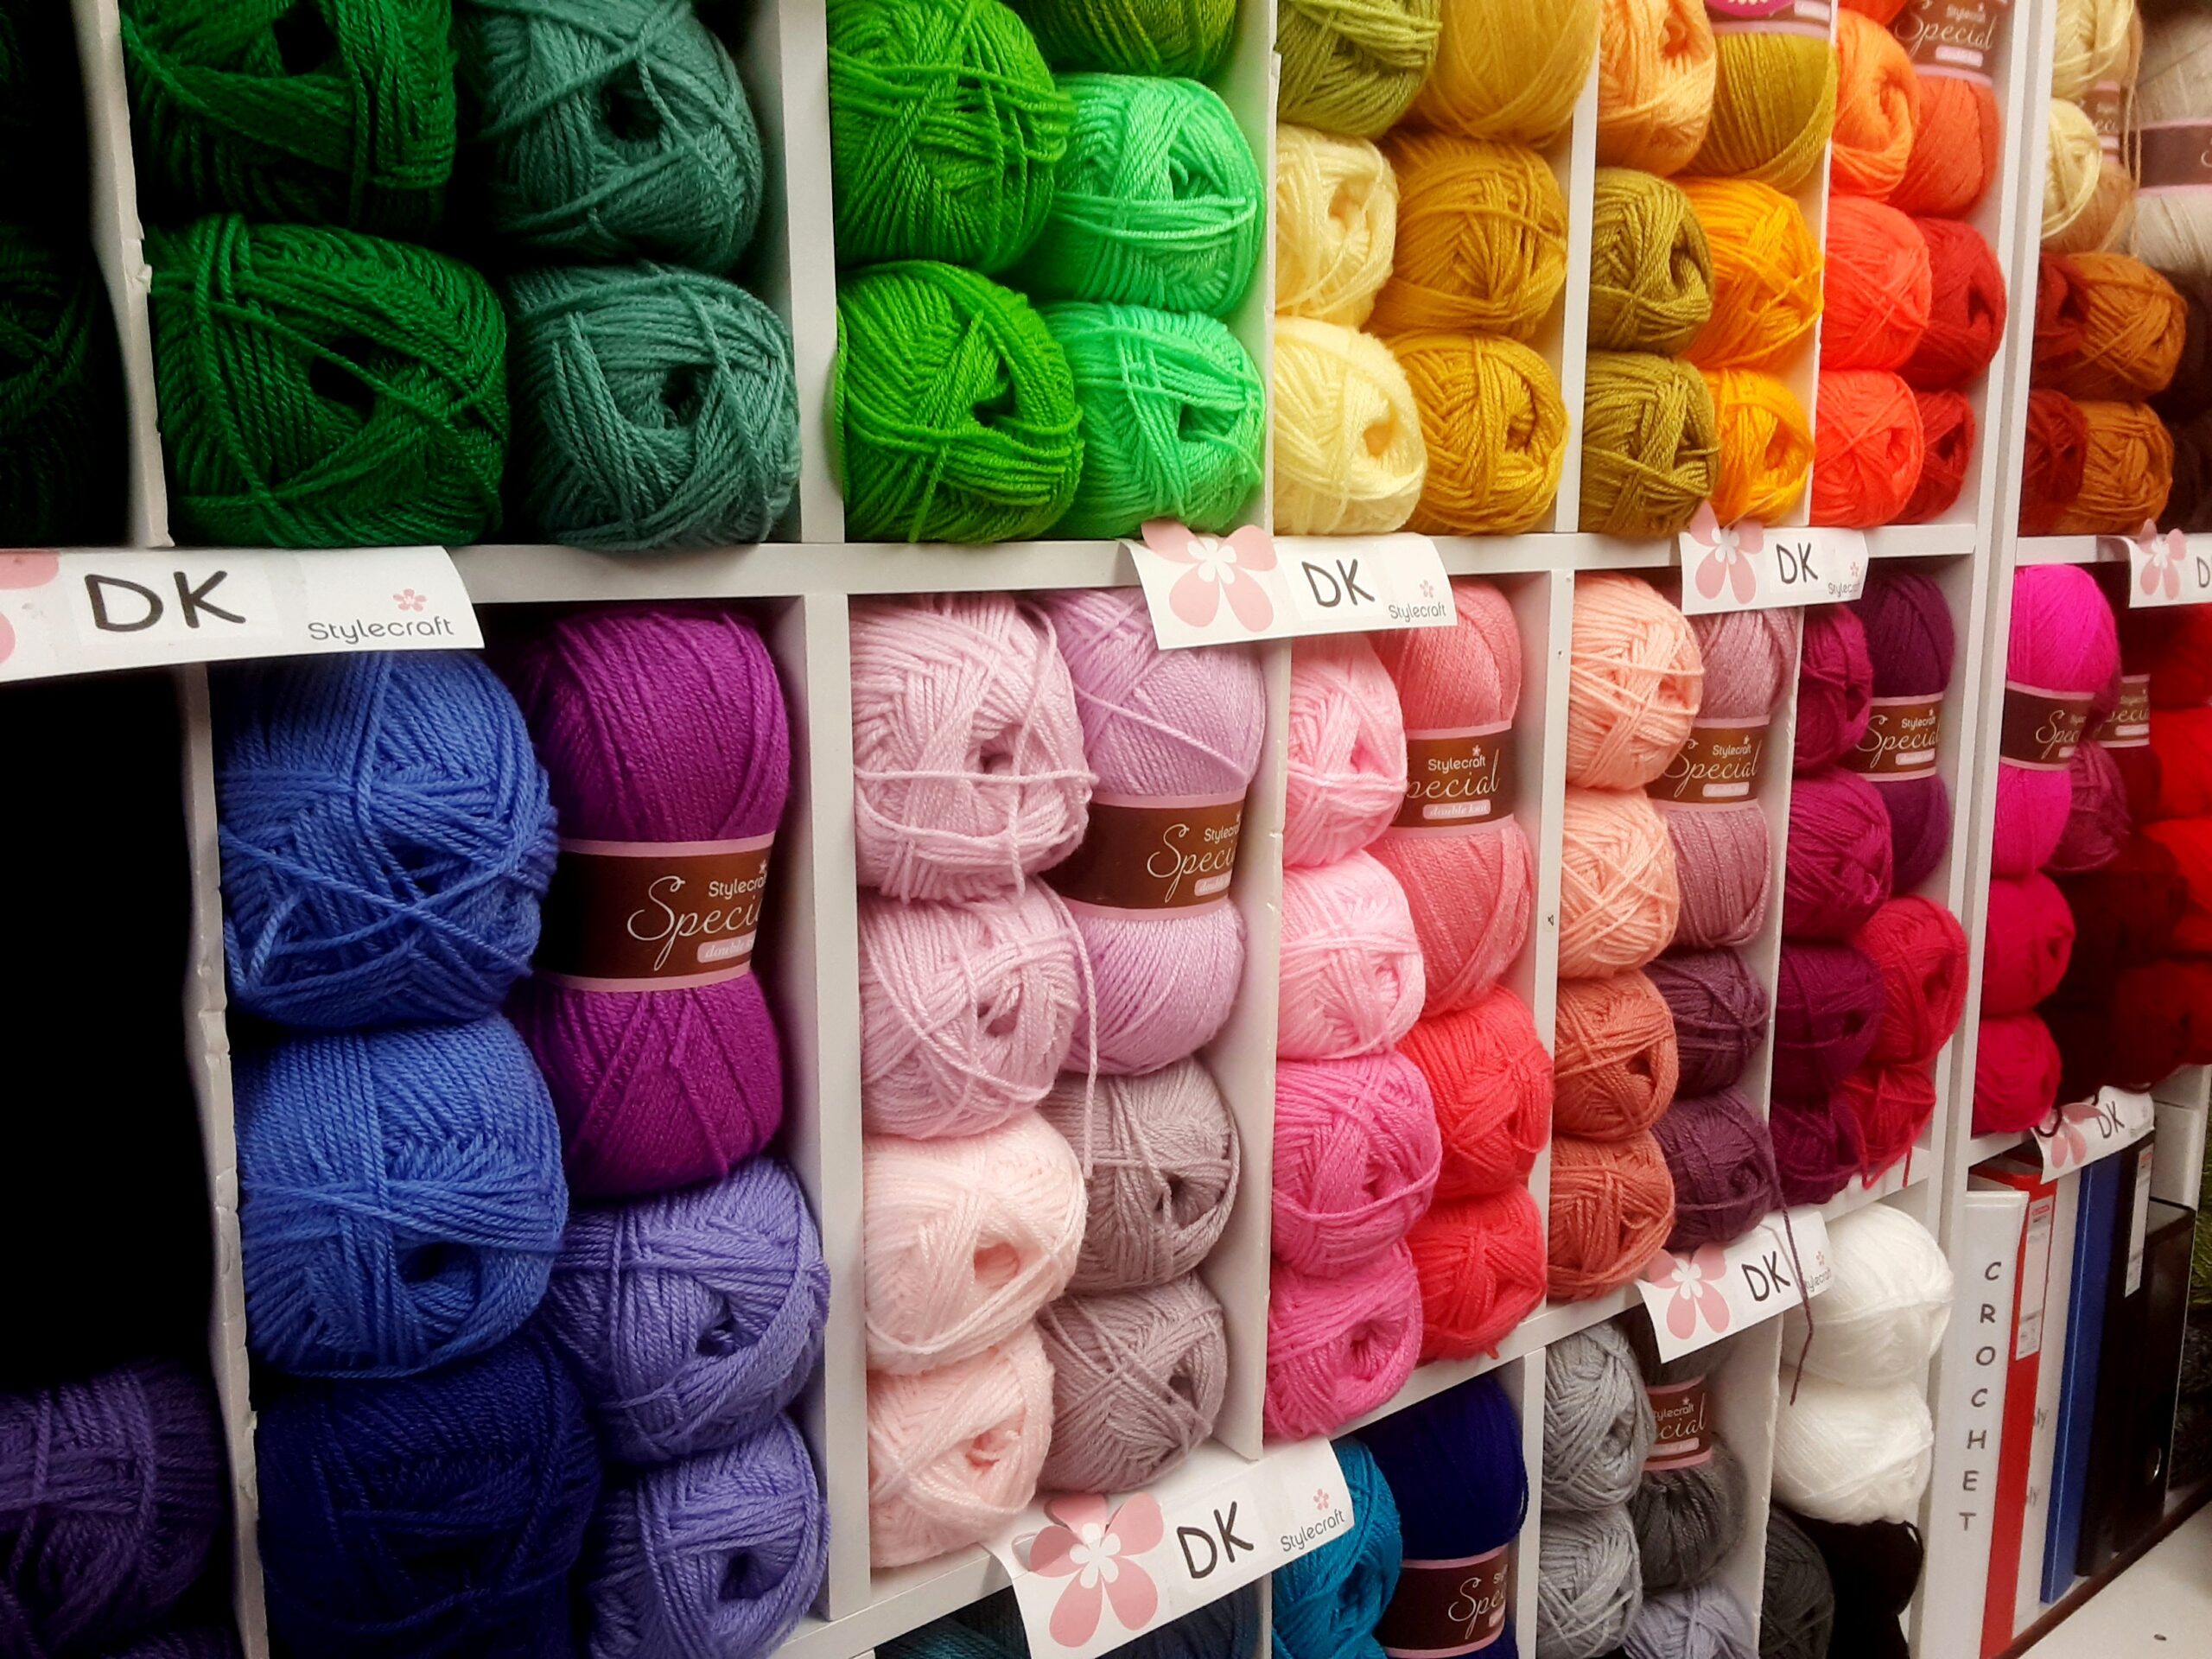 Knitting & crochet yarn